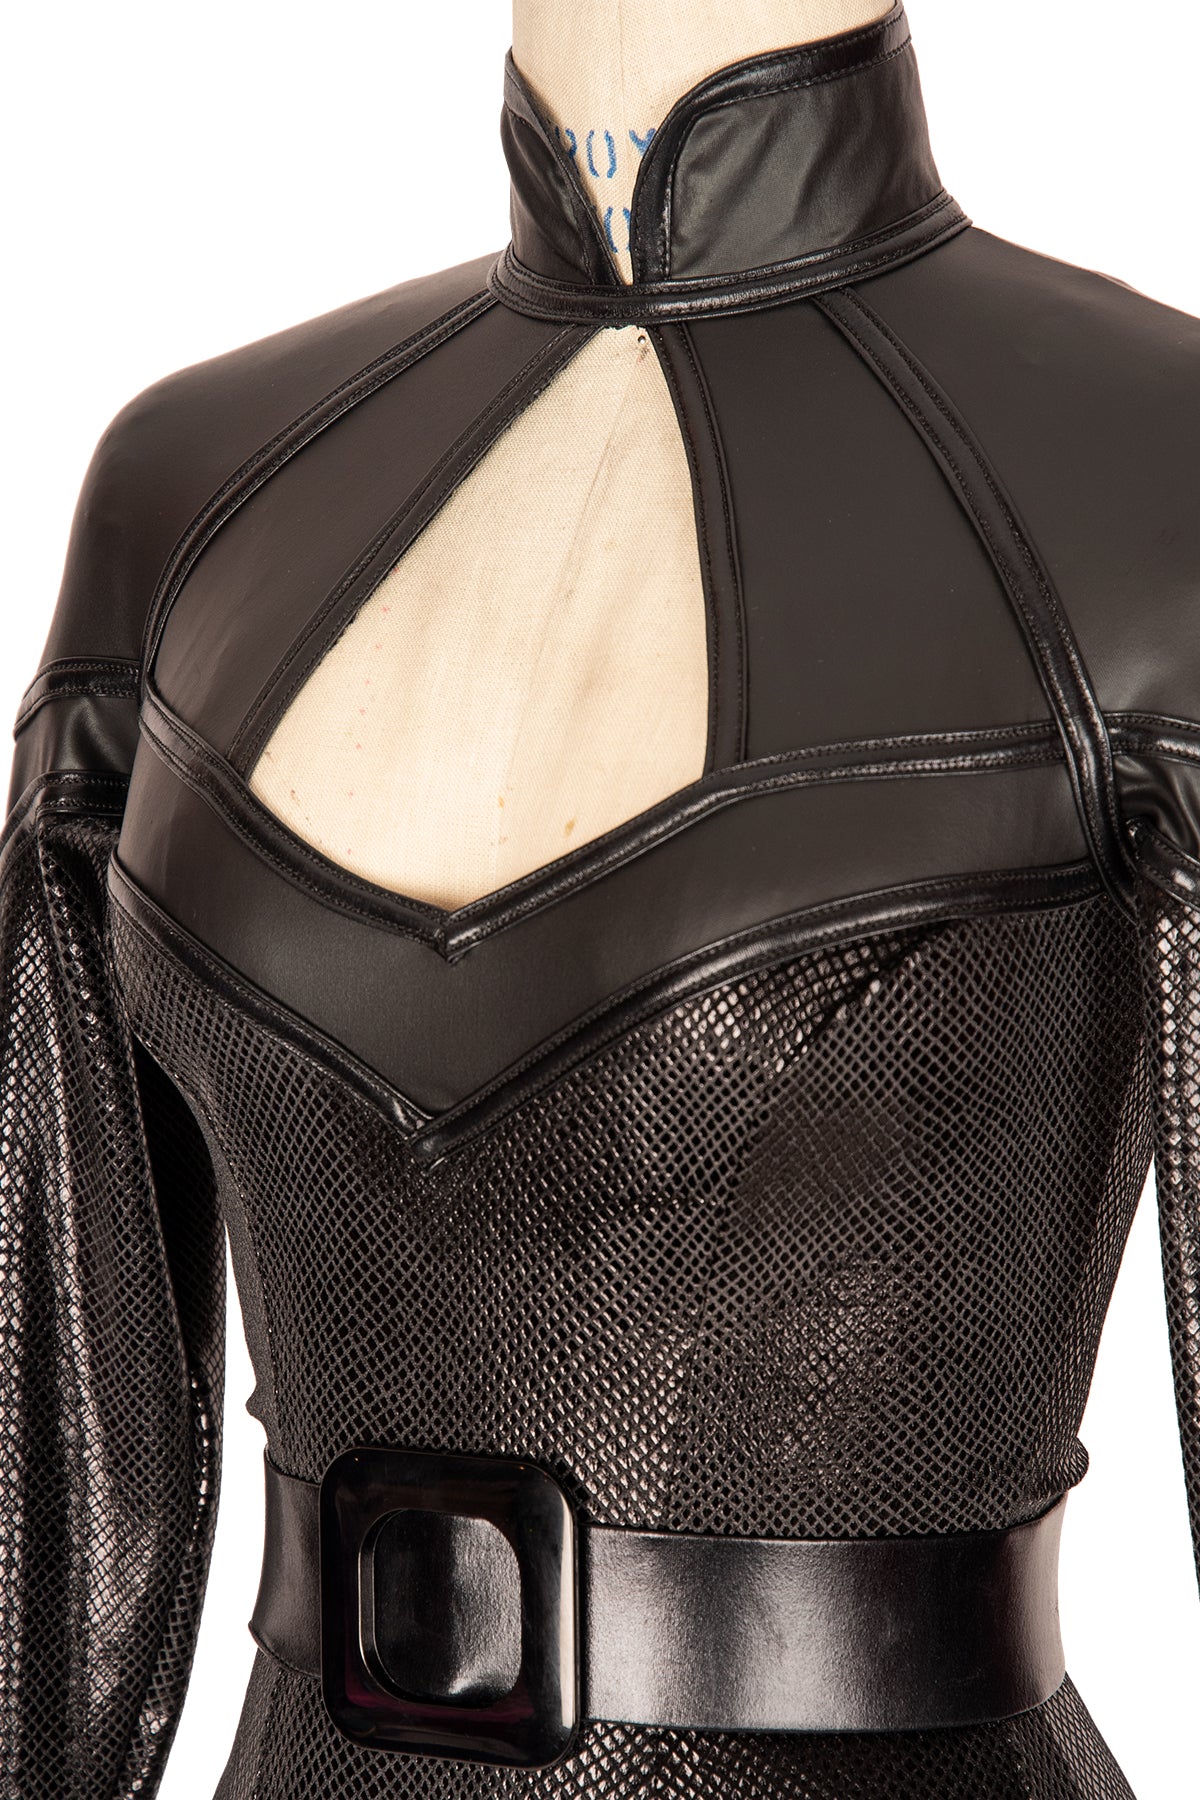 Black Widow Catsuit & Belt